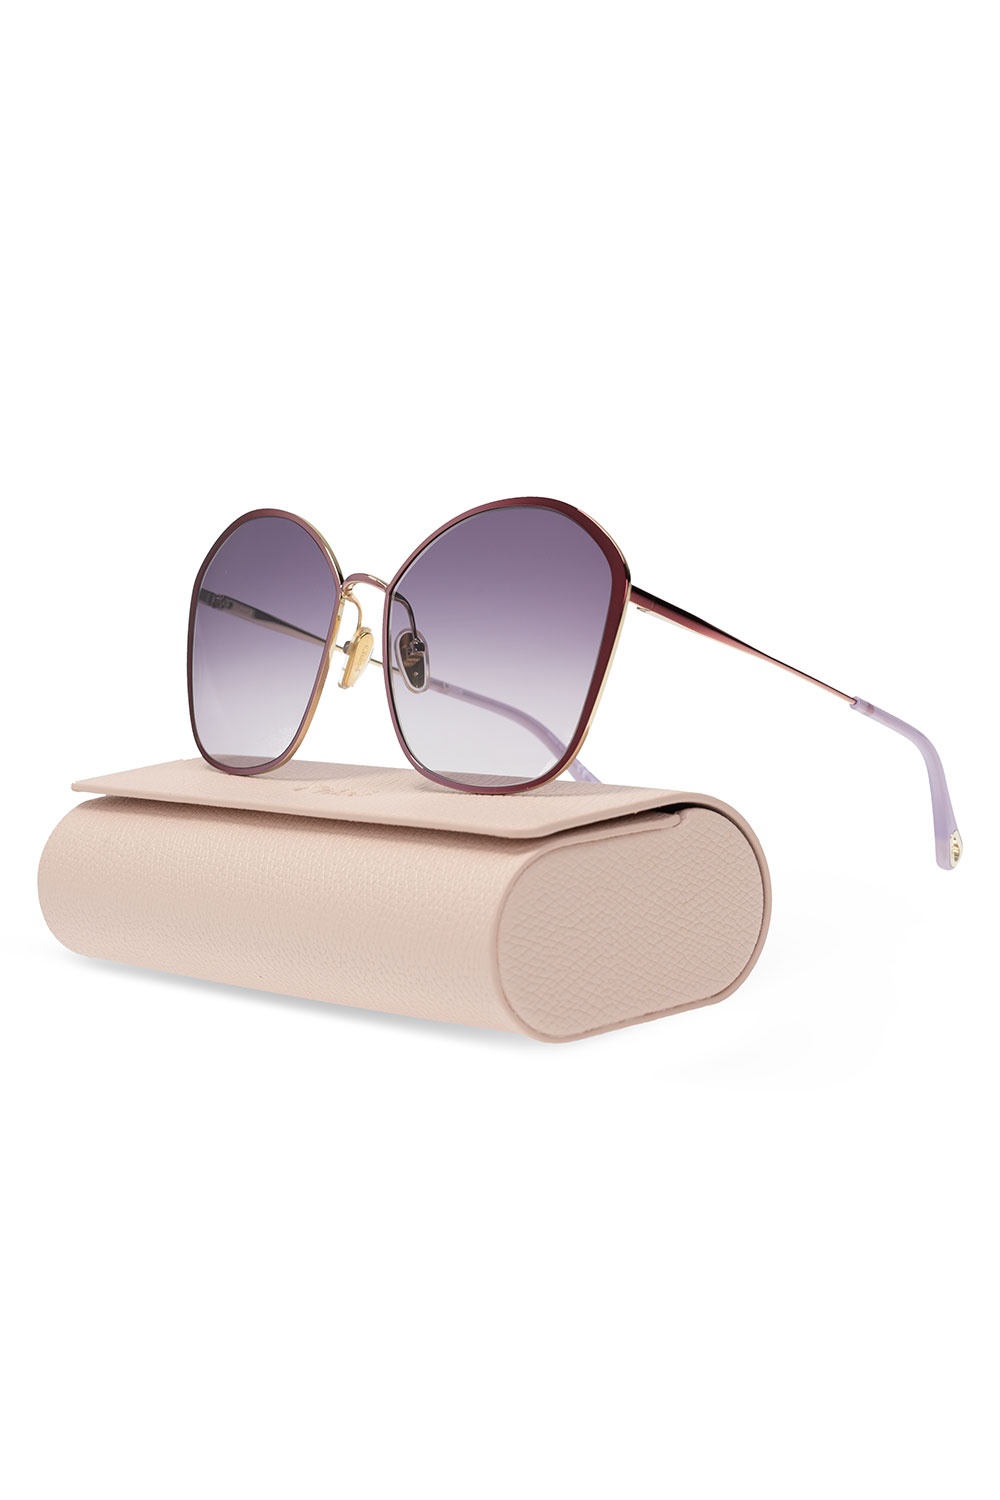 Chloé Sunglasses | Women's Accessories | Vitkac